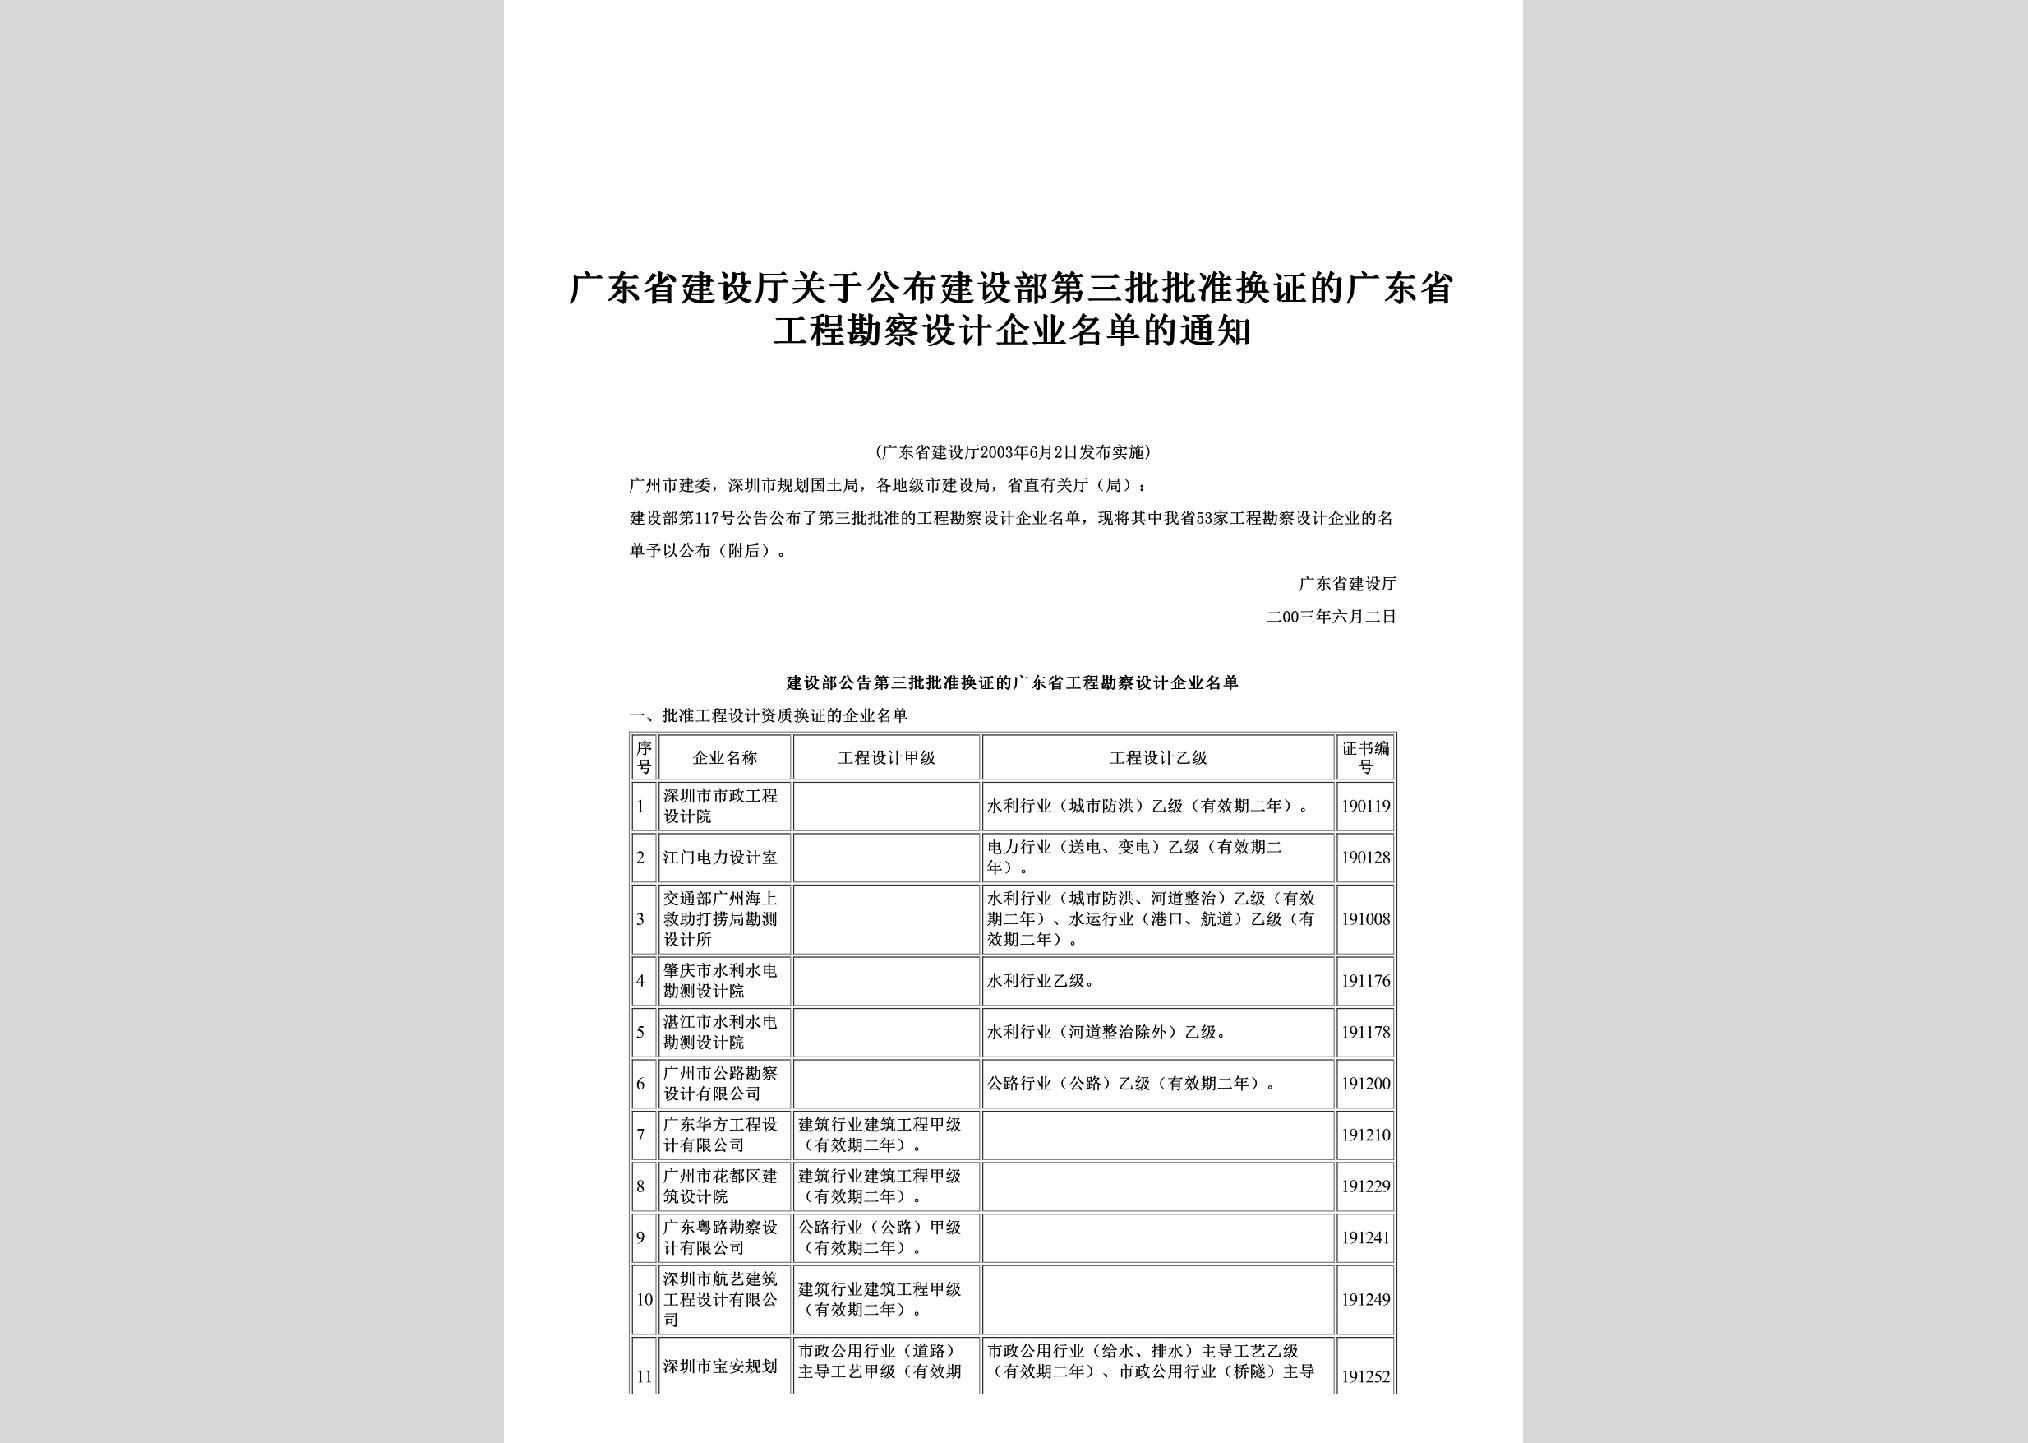 GD-GYGBJSBD-2003：关于公布建设部第三批批准换证的广东省工程勘察设计企业名单的通知